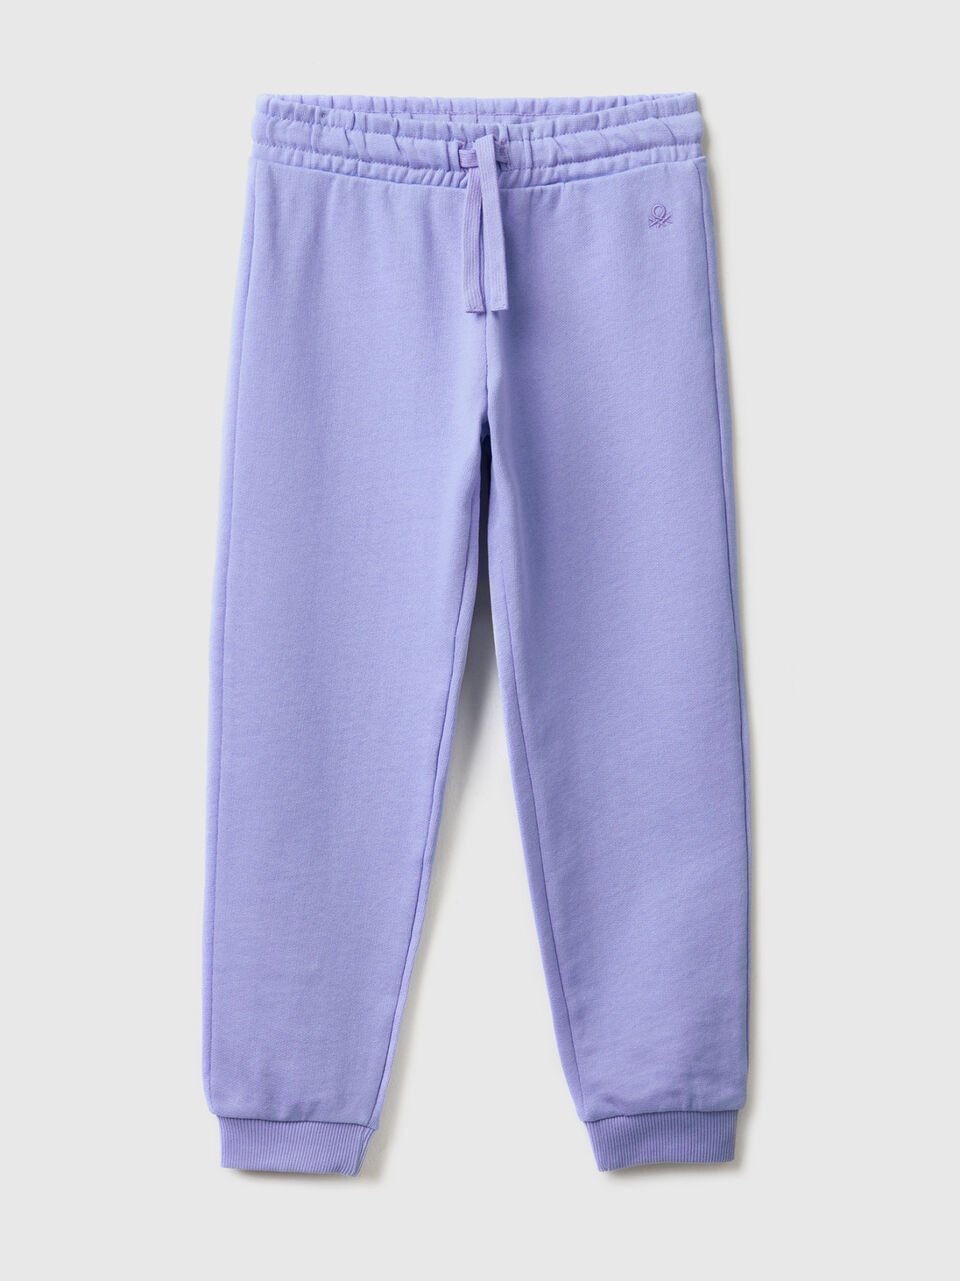 Sale Pantaloni in felpa con logo outlet benetton online